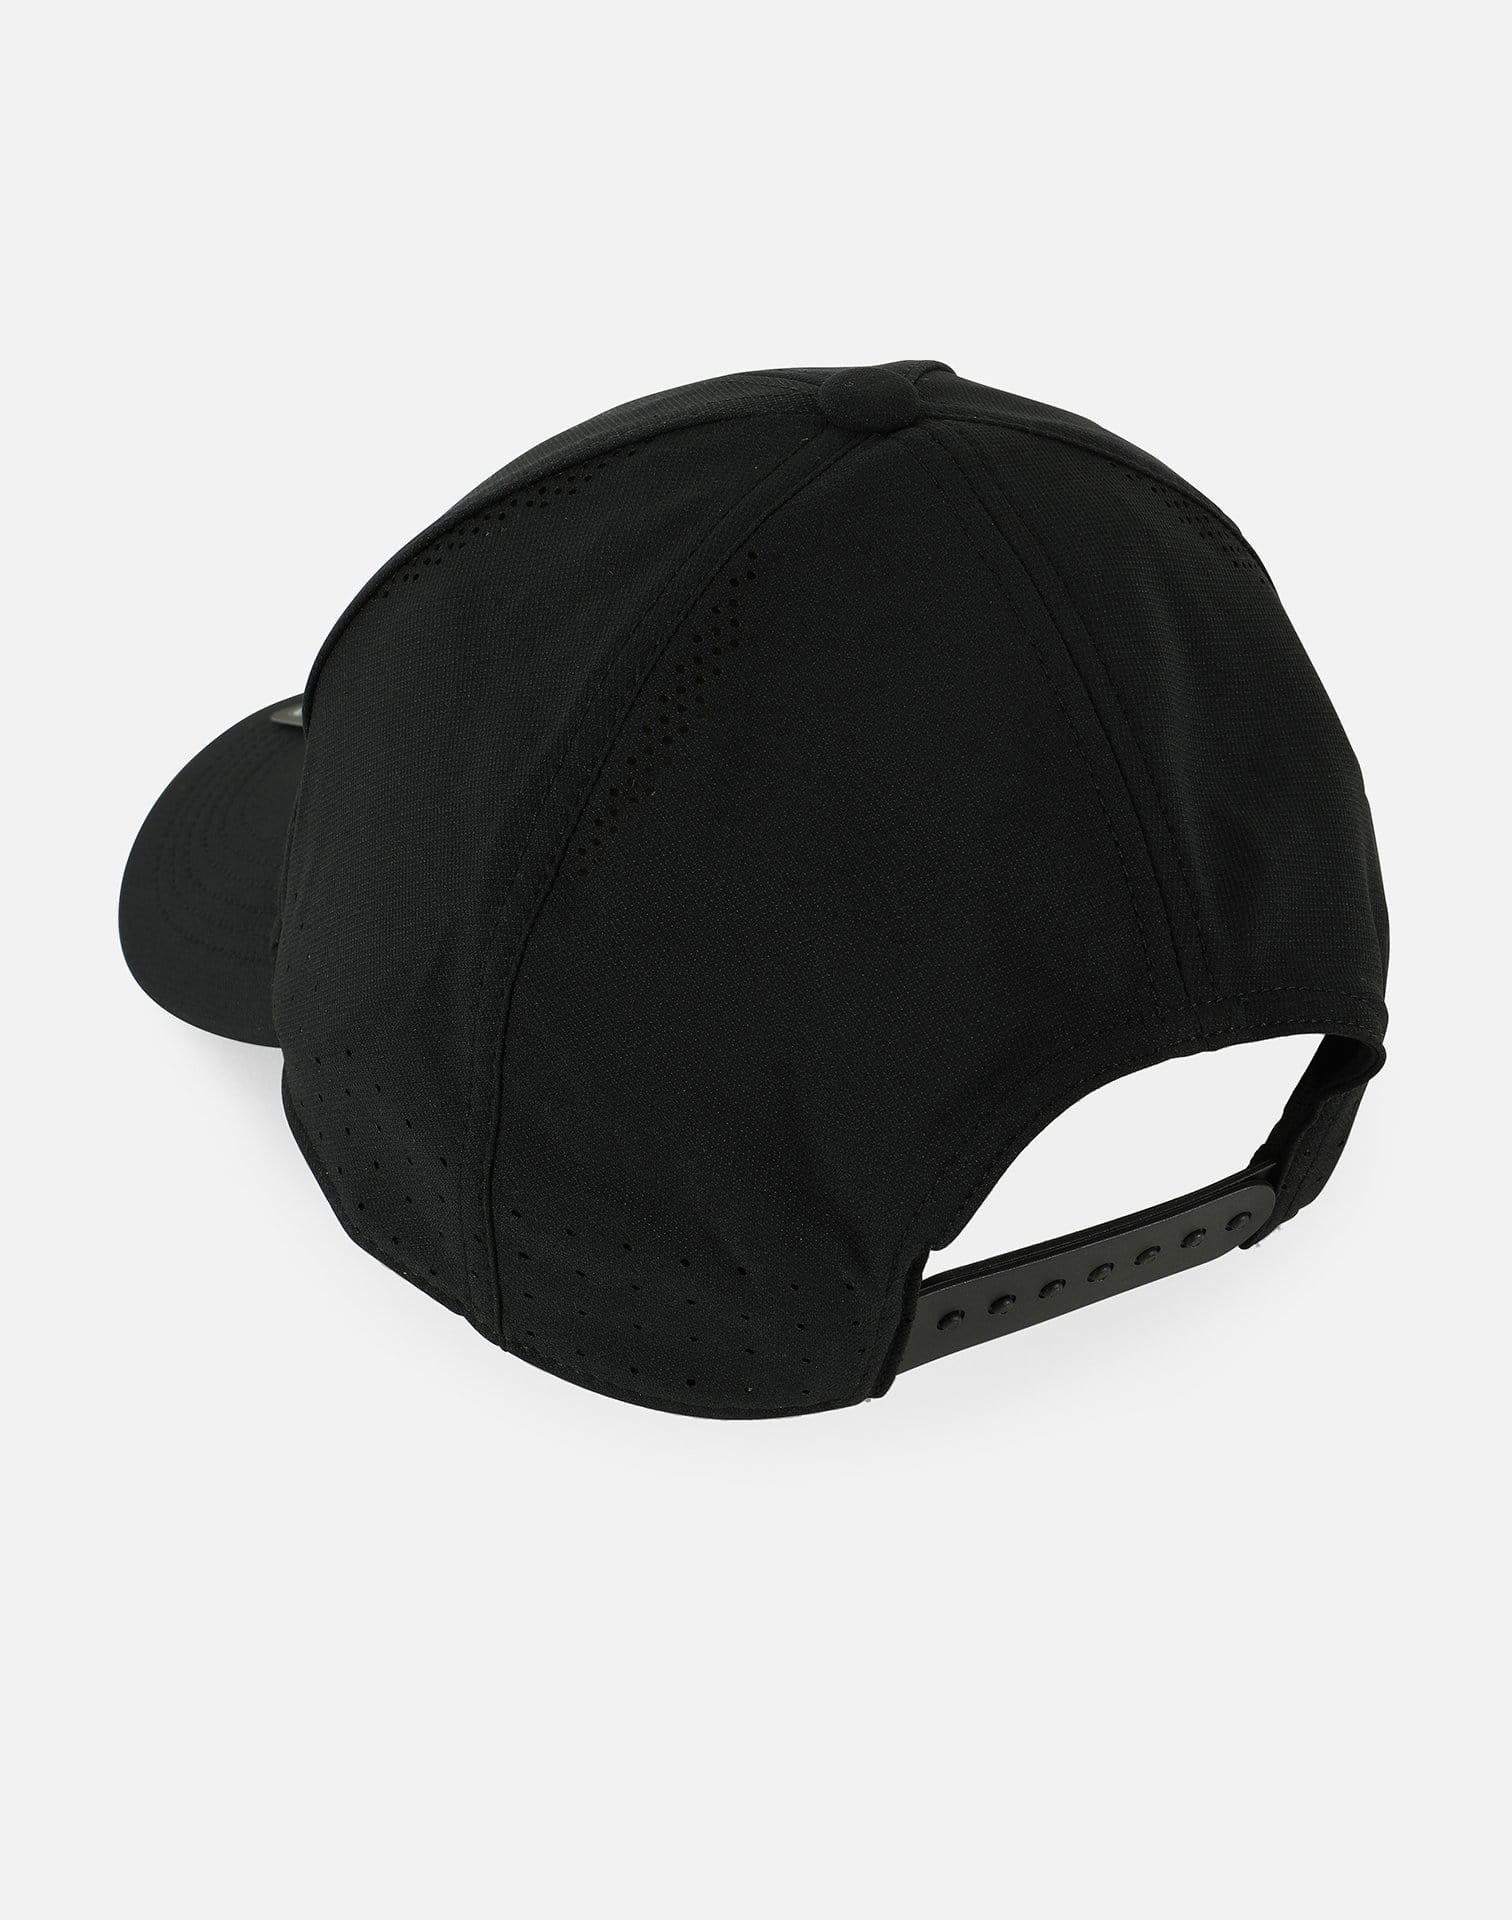 Nike Aerobill Legacy91 Snapback Hat